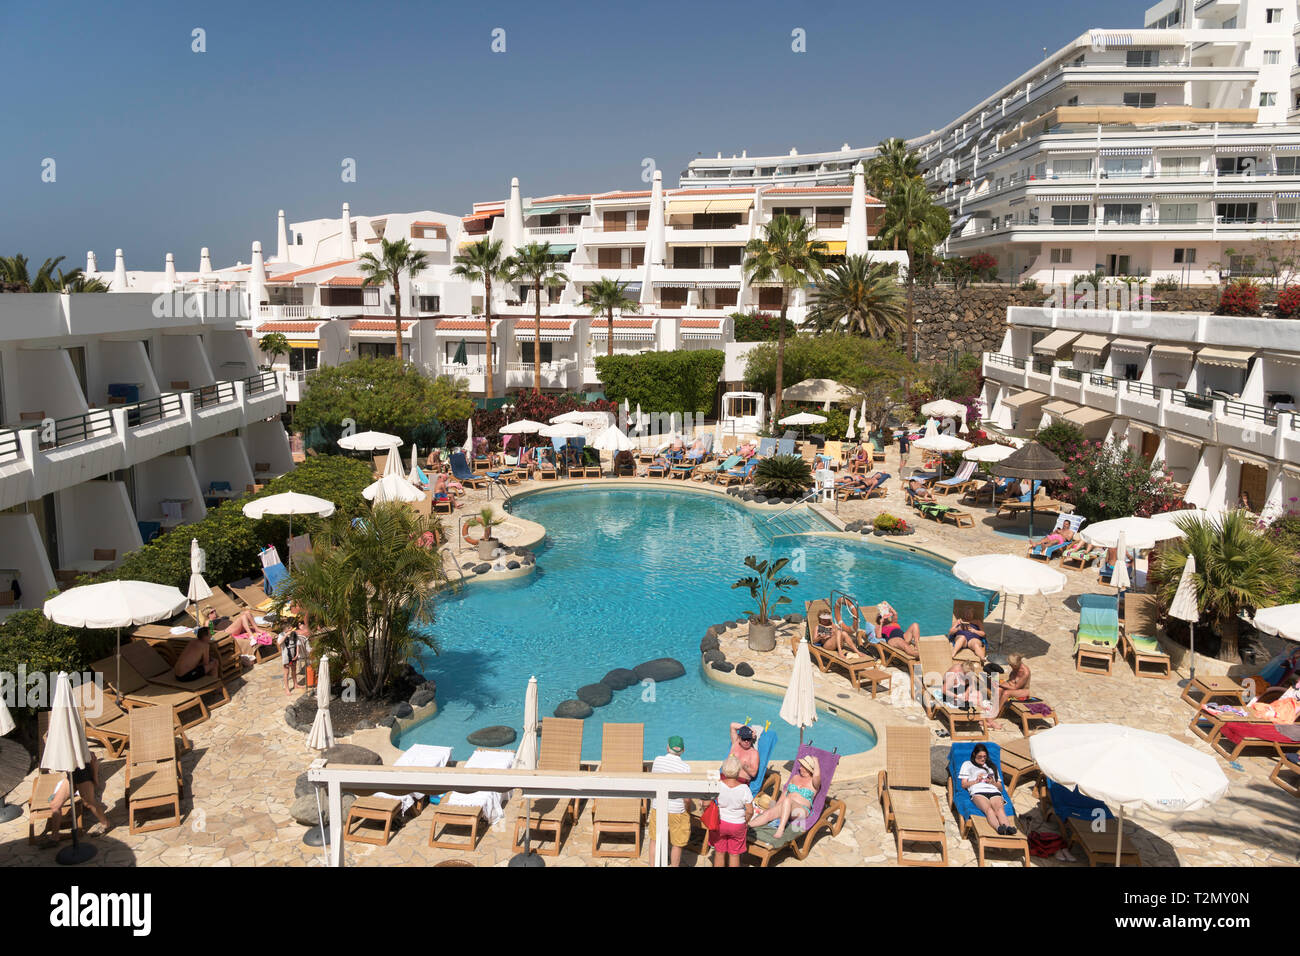 People sunbathing around the swimming pool of the Hovima Panorama Hotel in Costa Adeje, Santa Cruz de Tenerife, Spain Stock Photo